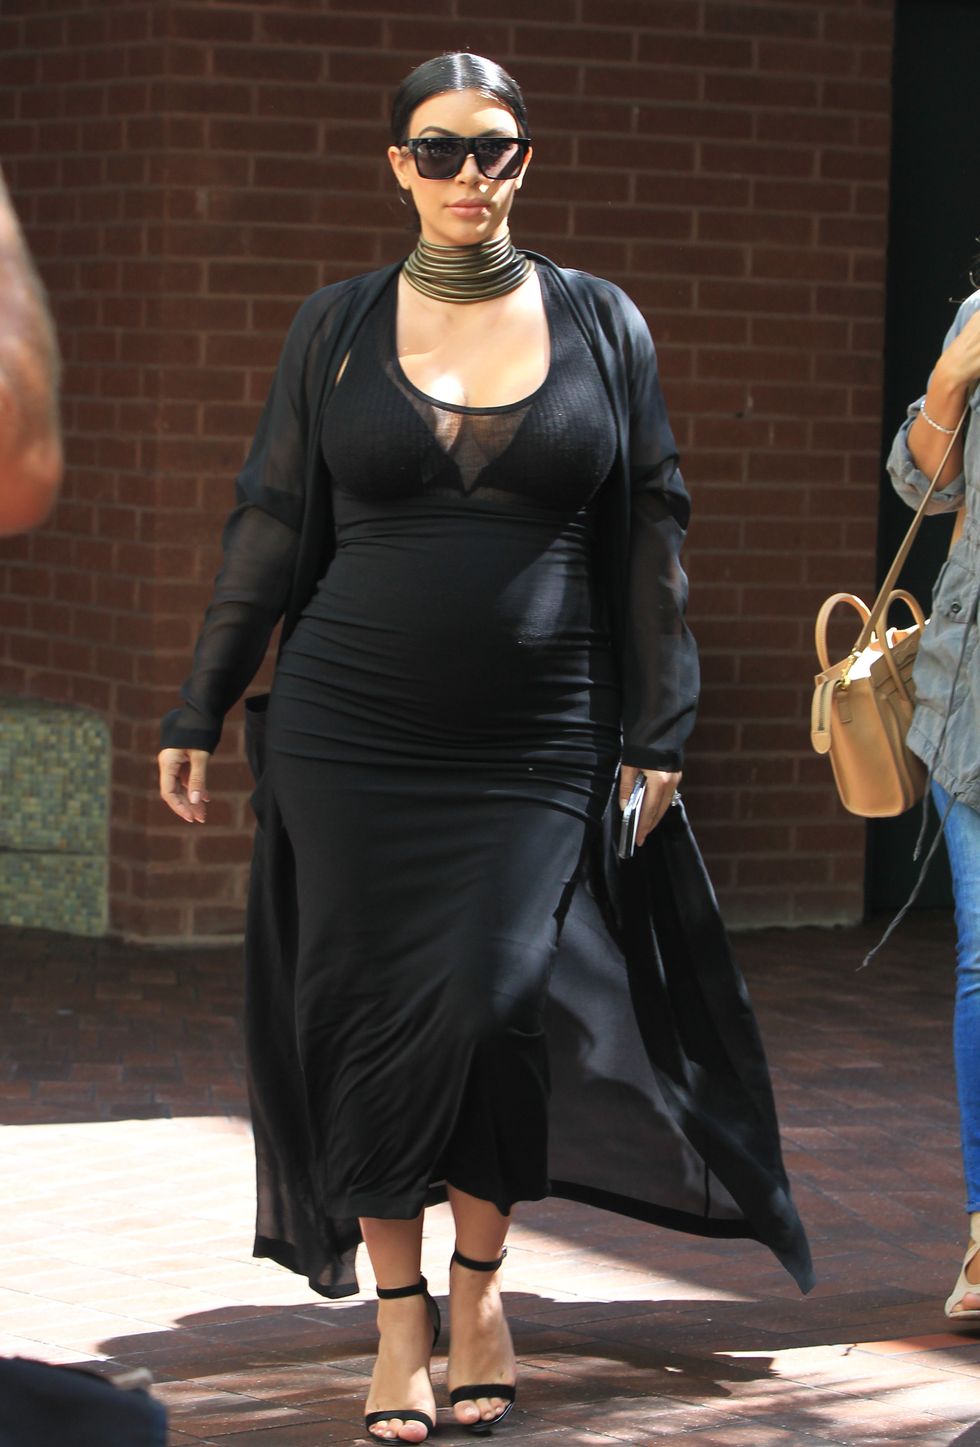 Kim Kardashian wearing a black dress and gold necklace